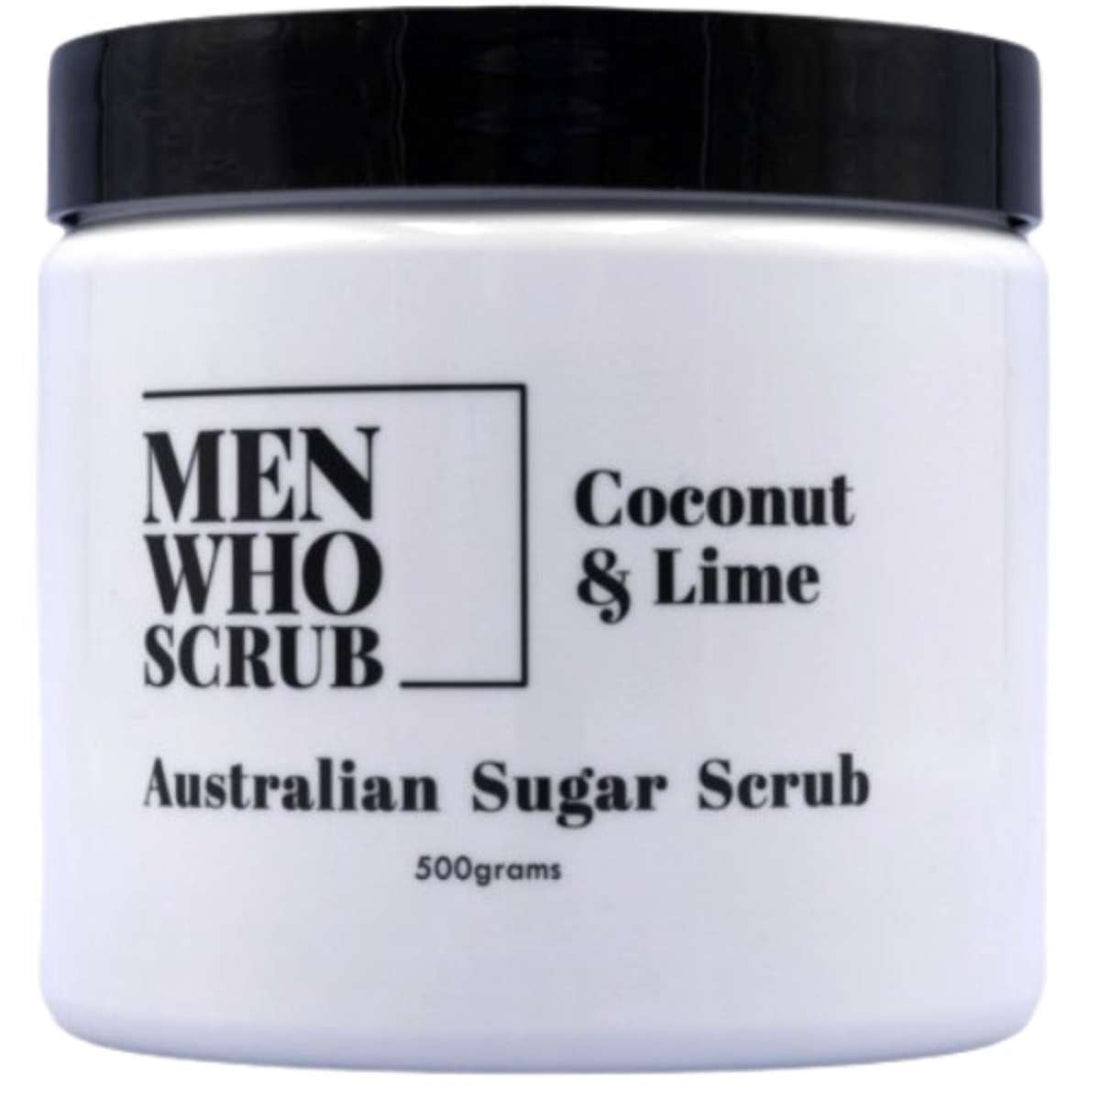 Men Who Scrub Coconut and Lime Sugar Body Scrub 500g